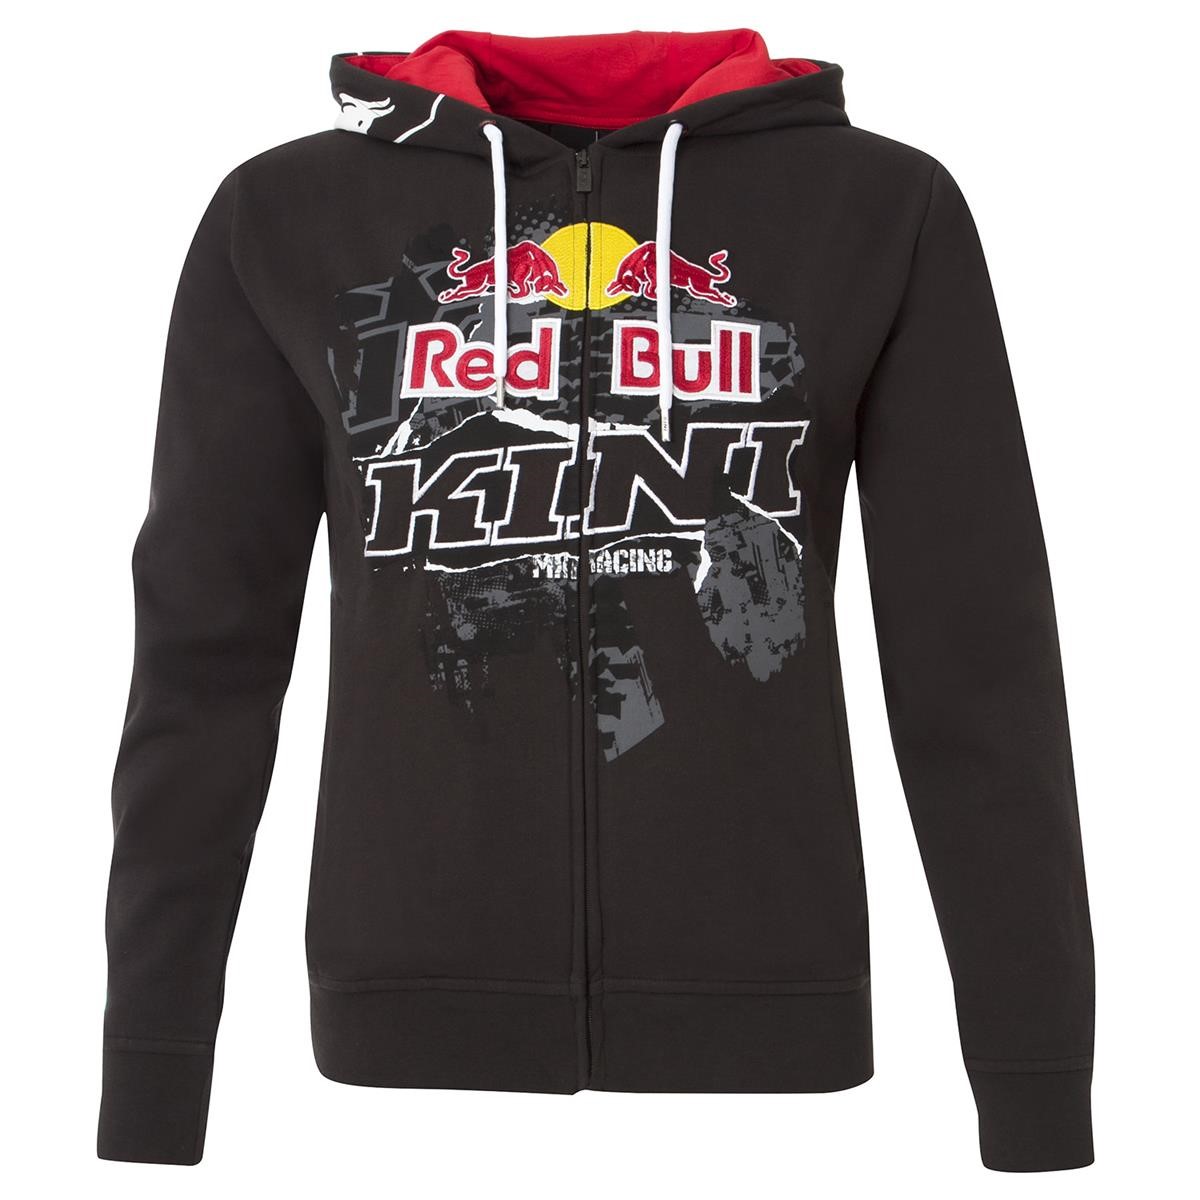 Kini Red Bull Zip-Hoody Collage Schwarz